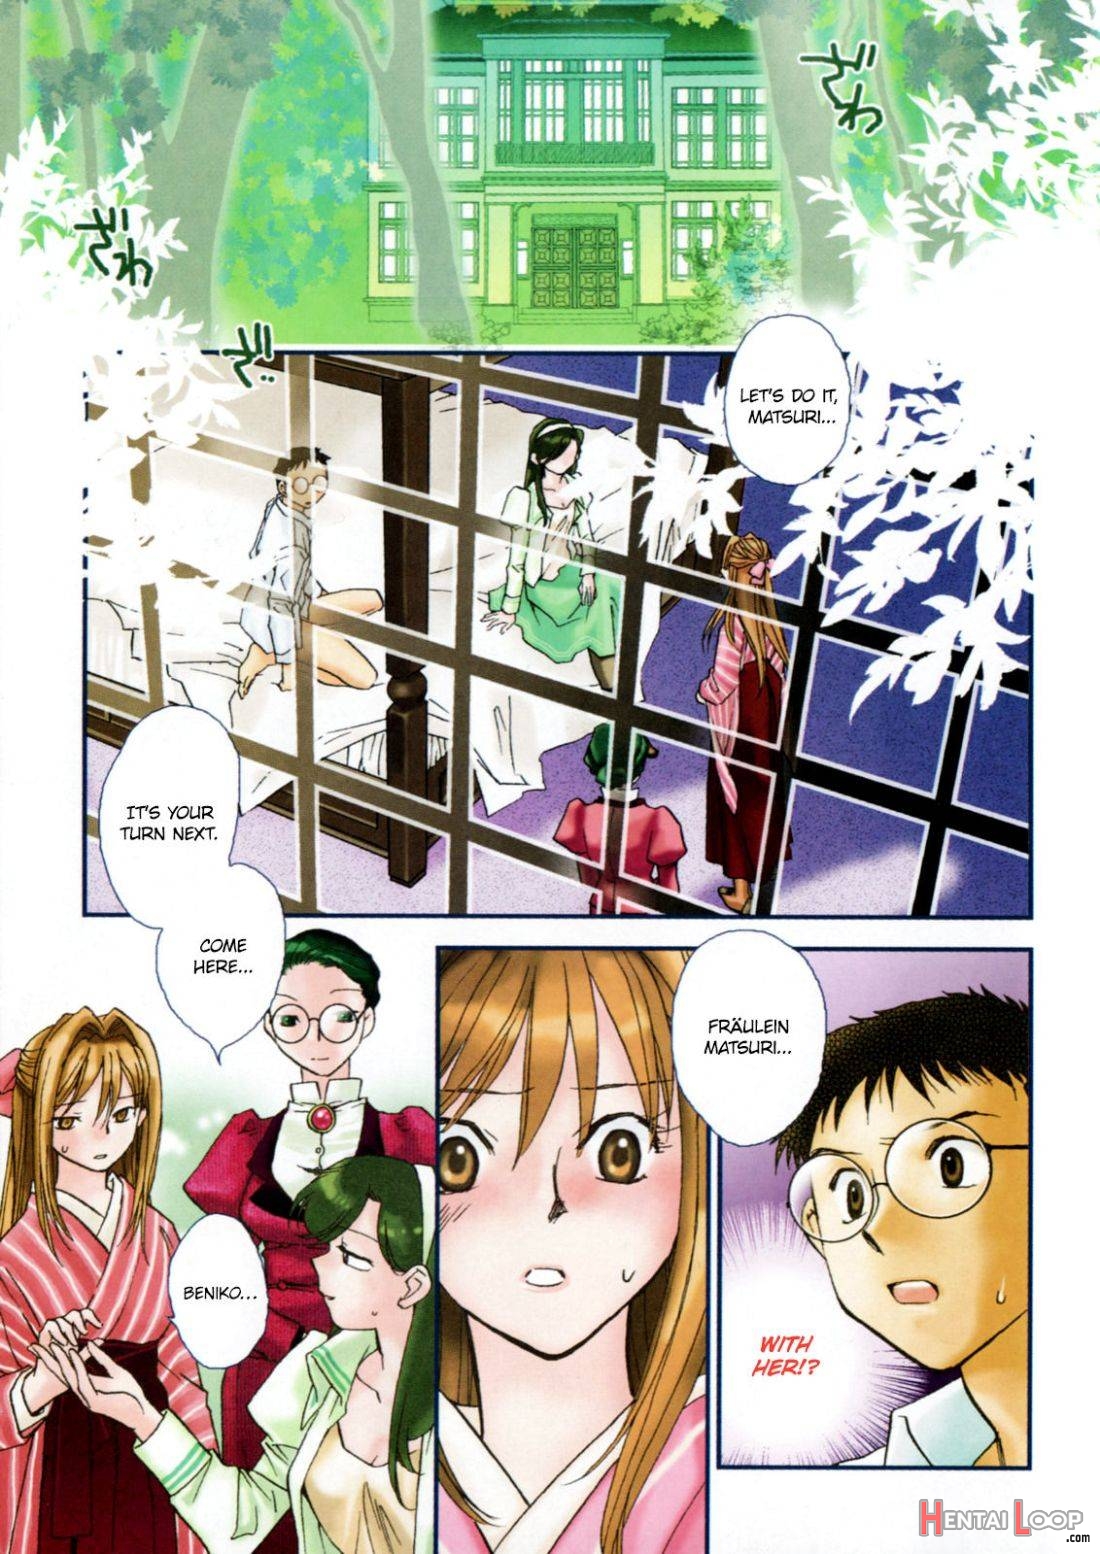 Hanasake! Otome Private Tutoring School vol 2 page 2